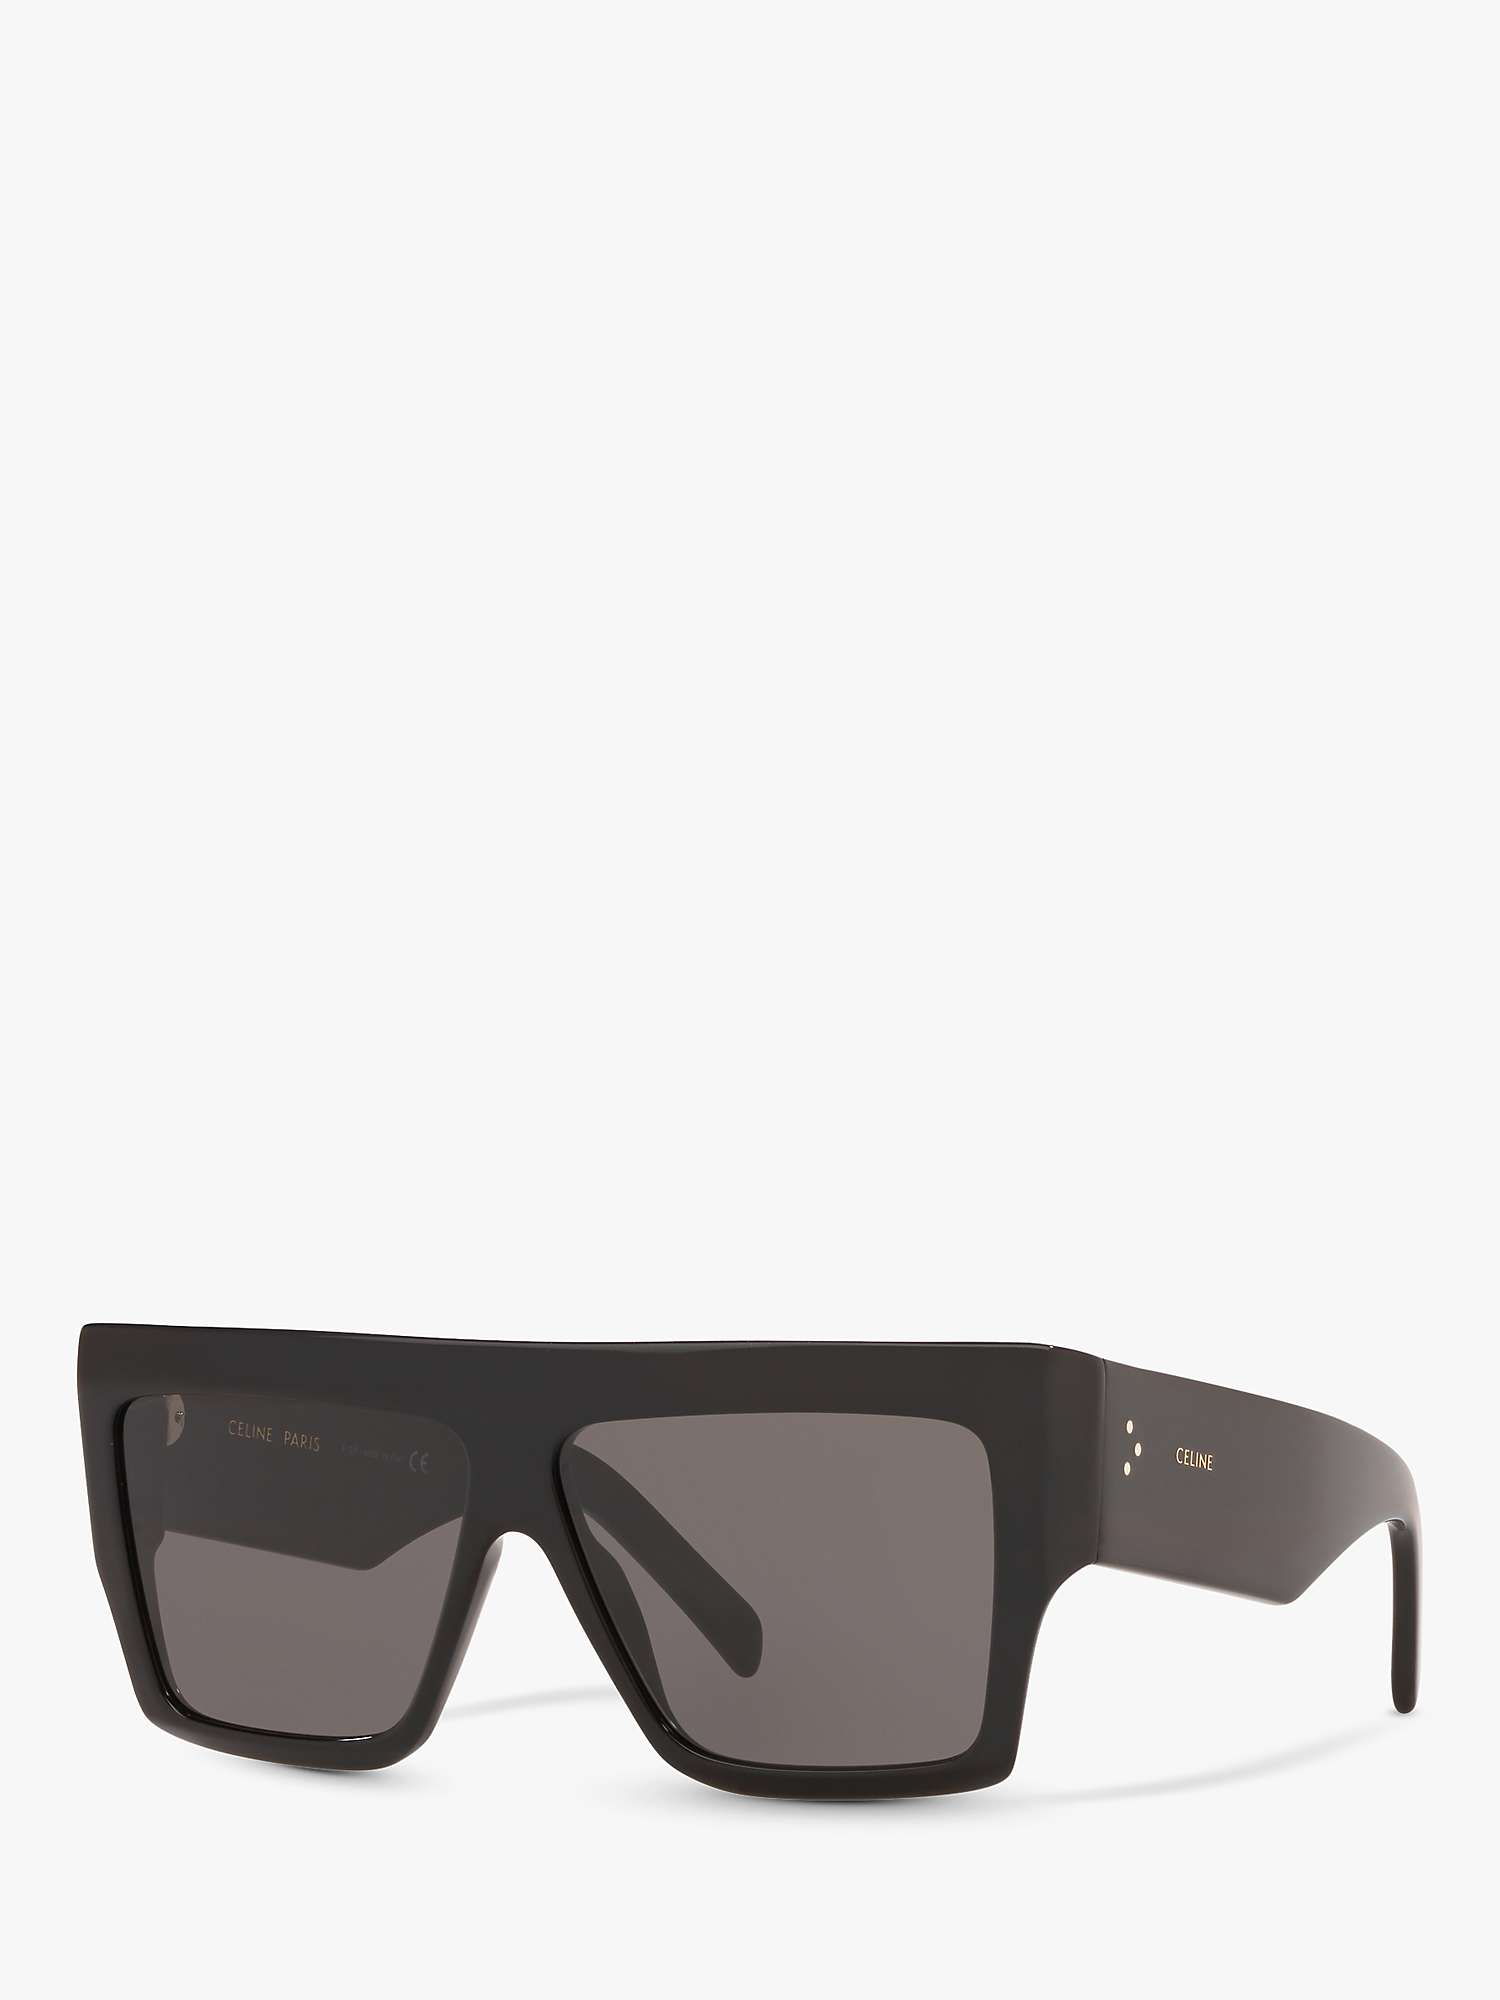 Buy Celine CL000240 Women's Square Sunglasses, Shiny Black/Grey Online at johnlewis.com